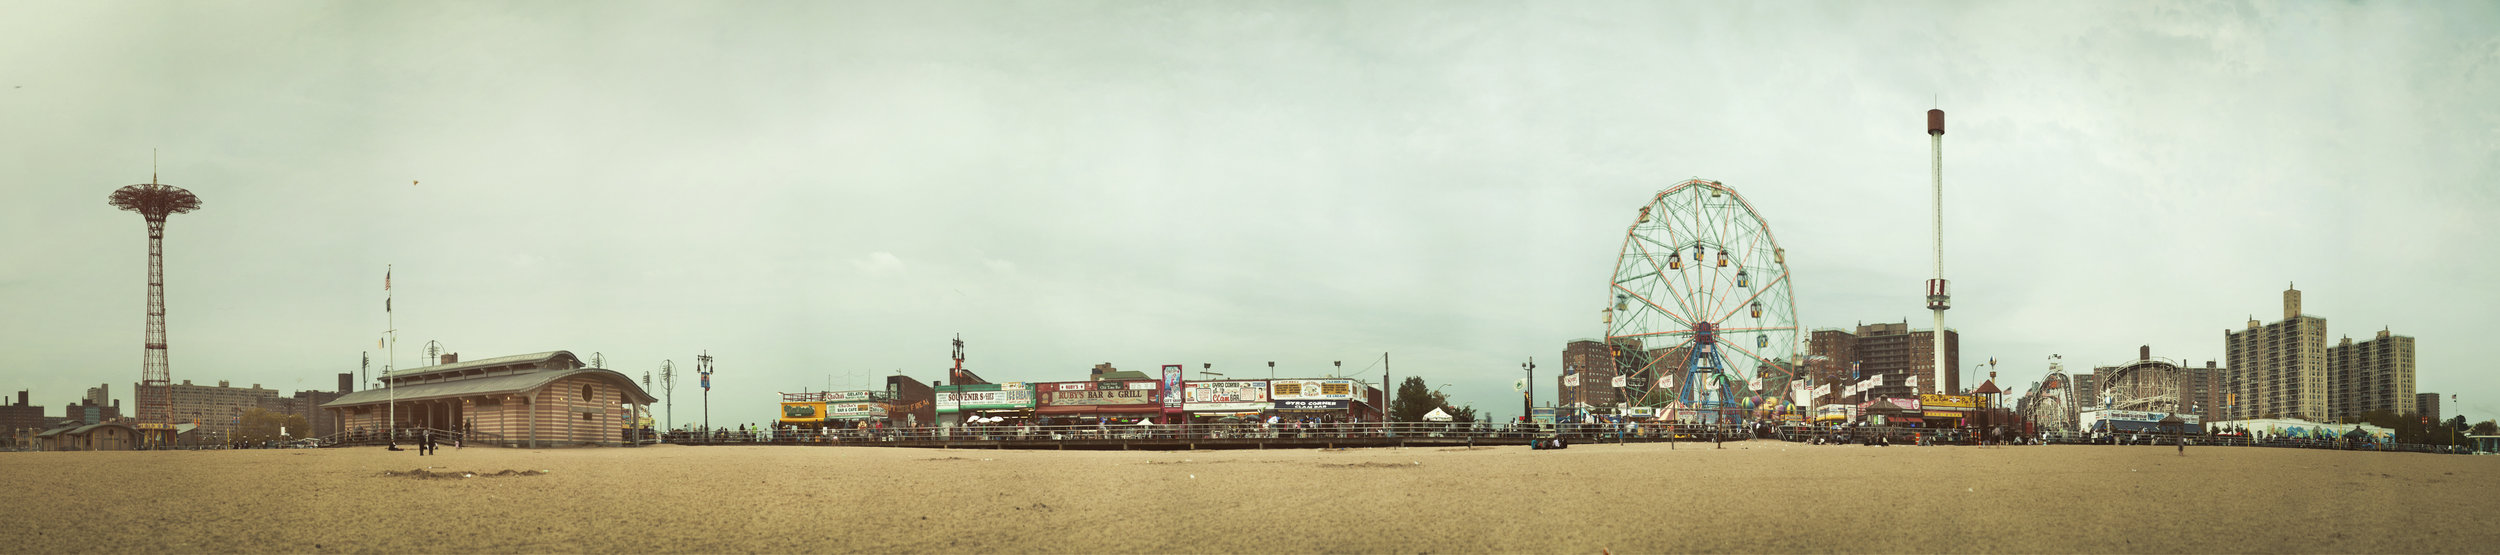 Coney Island-4.jpg